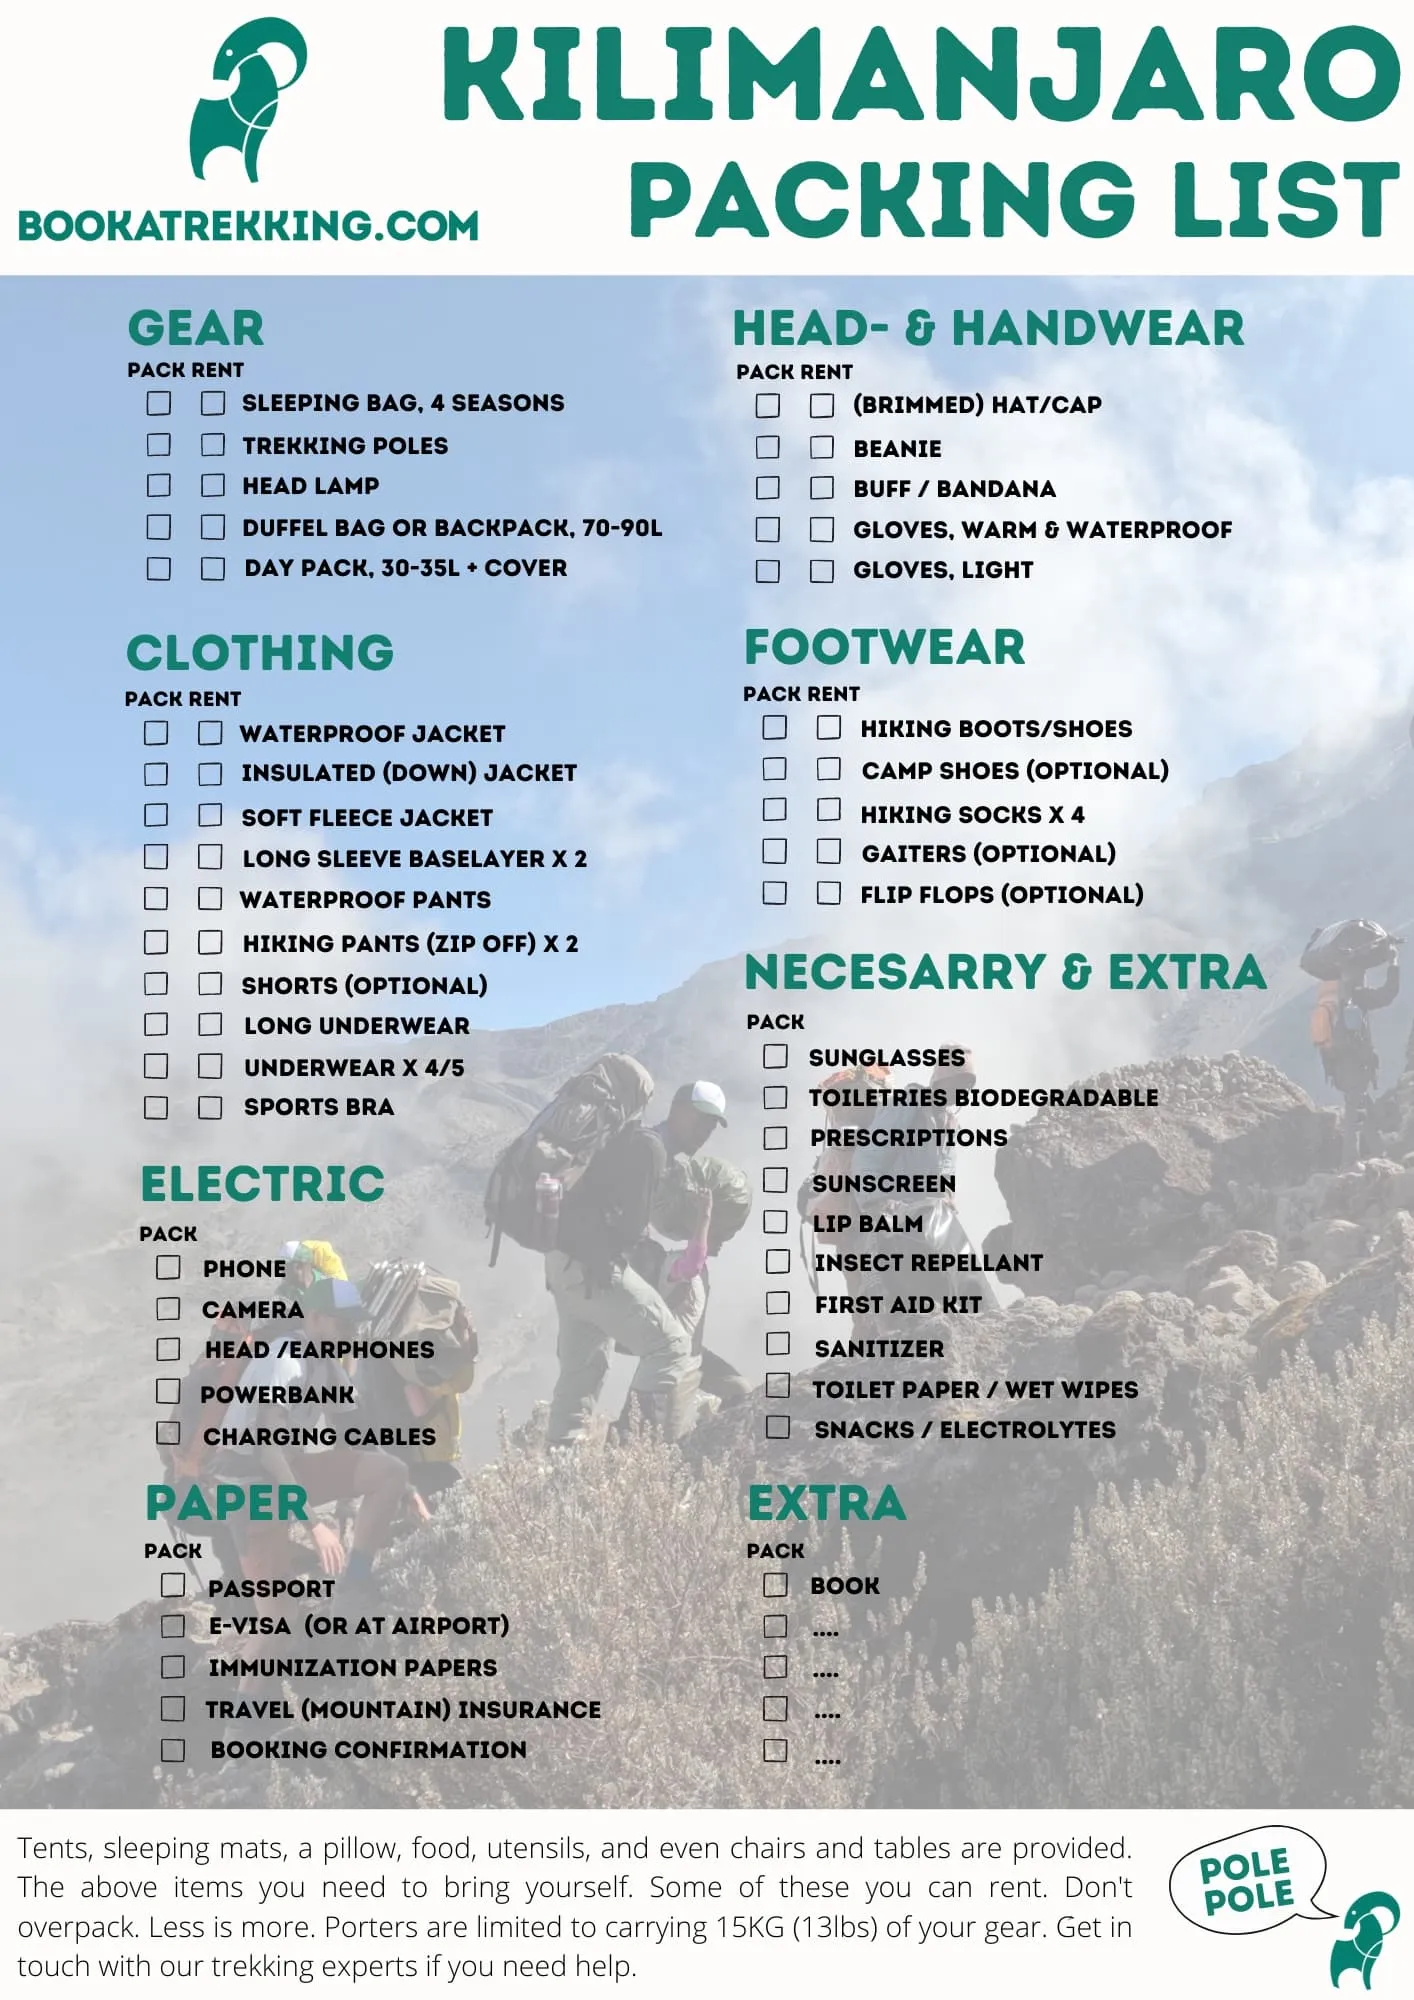 Kilimanjaro Hiking Gear Checklist